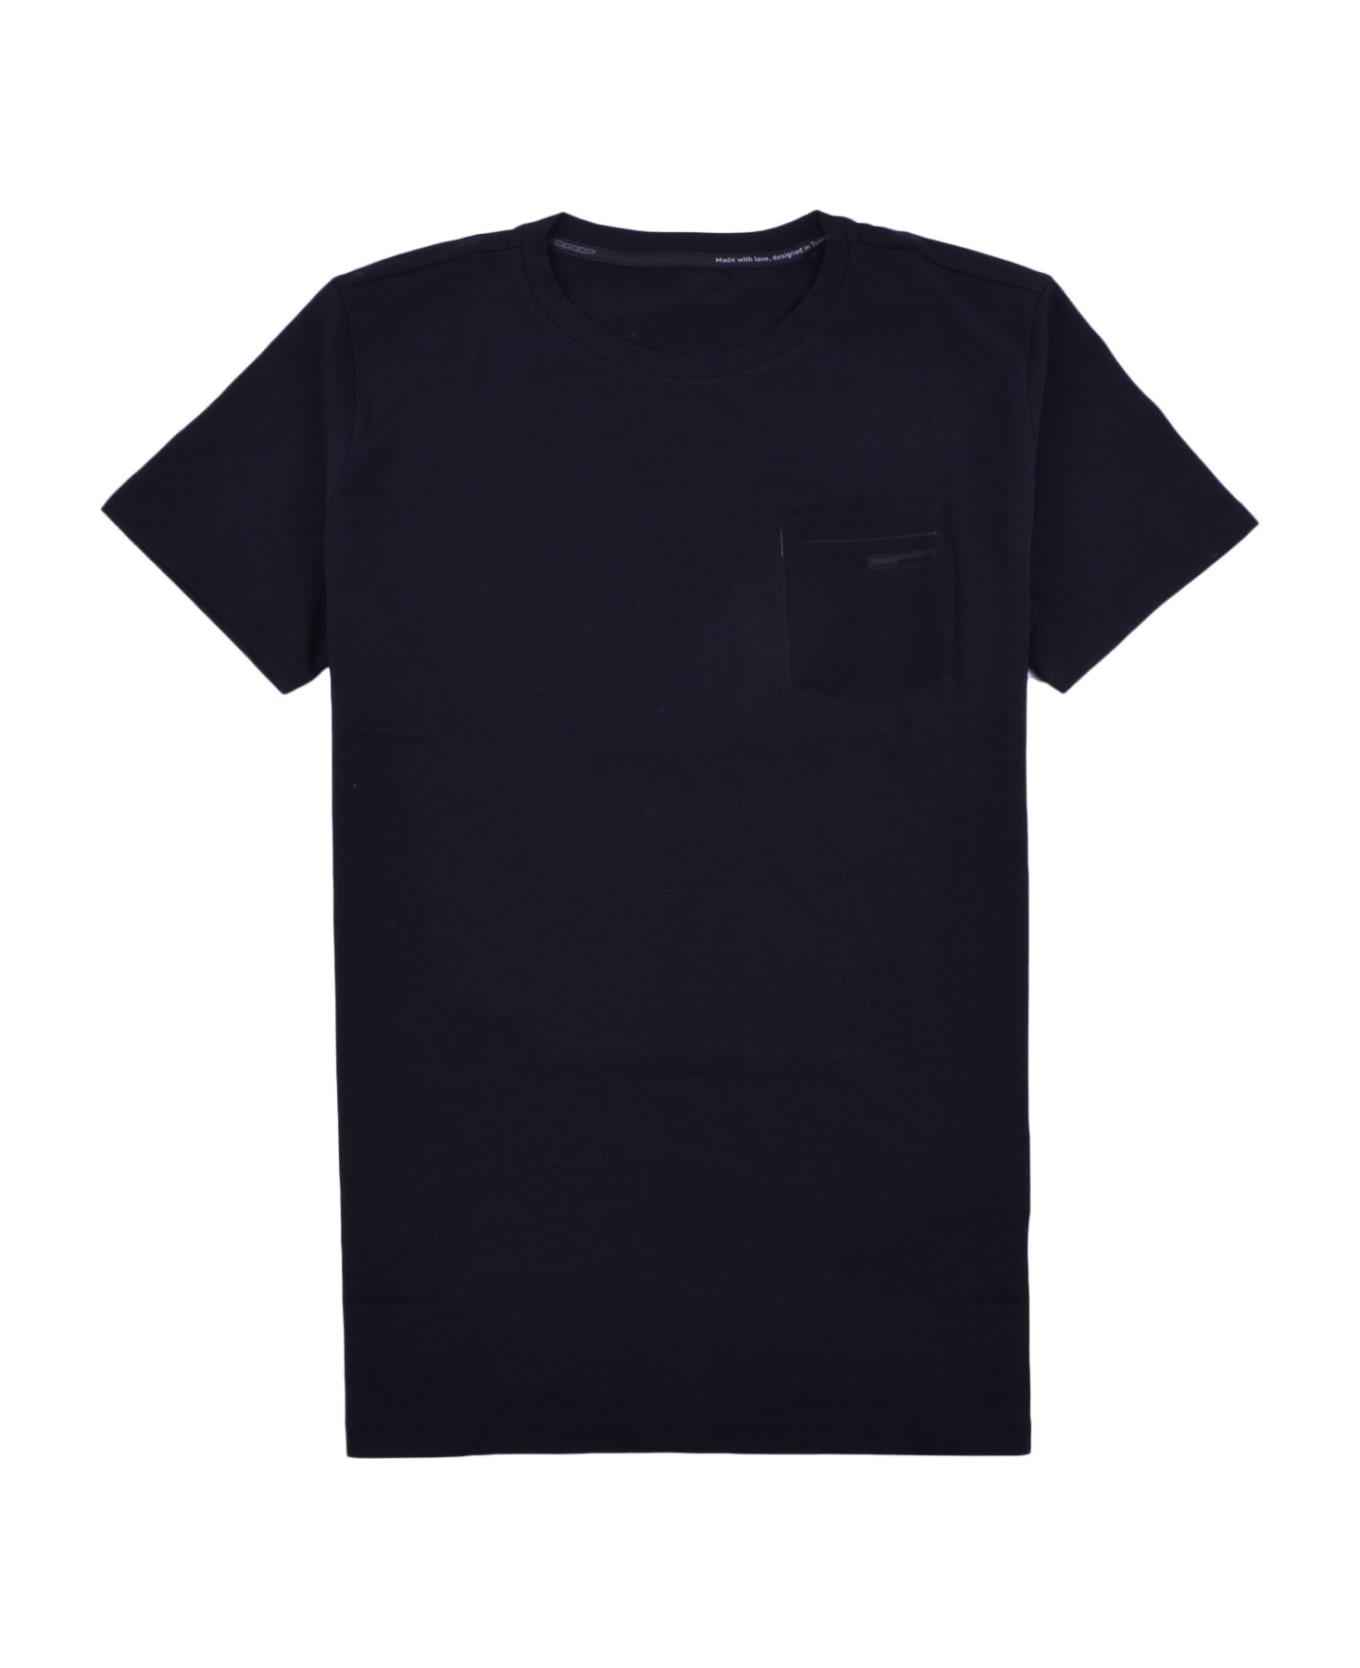 RRD - Roberto Ricci Design T-shirt - Black